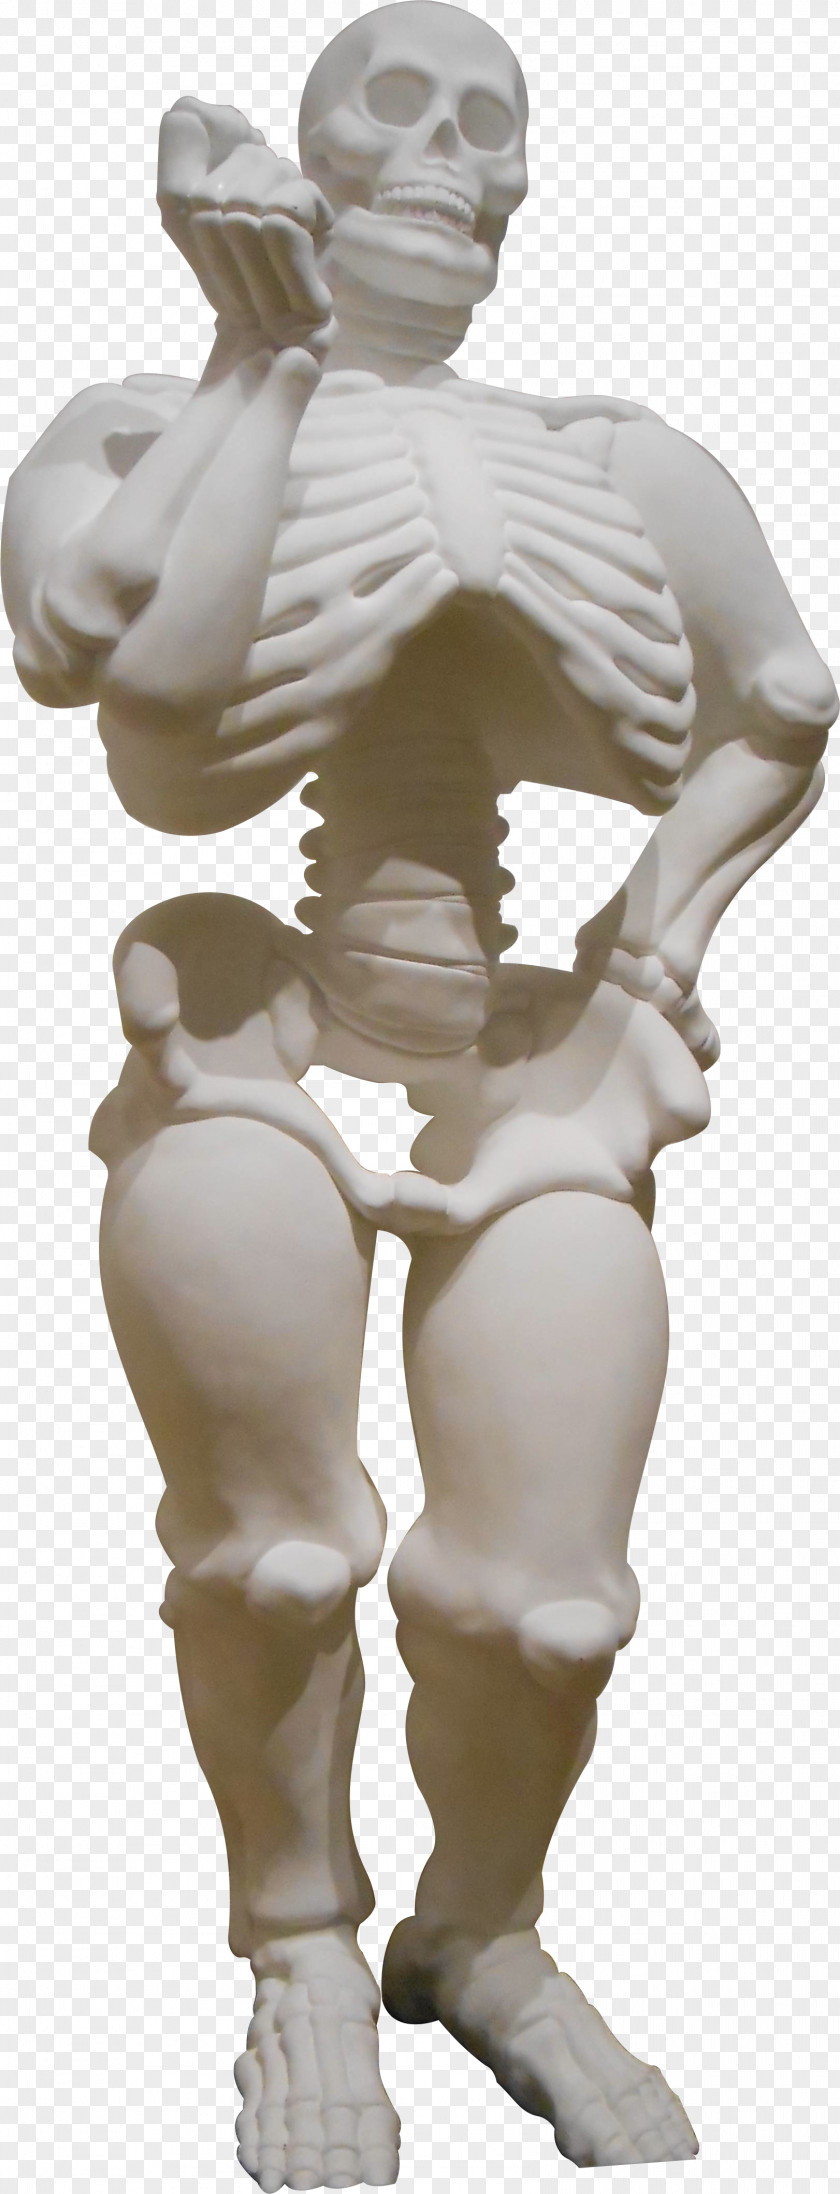 Skeleton Human Bone Body Figurine PNG